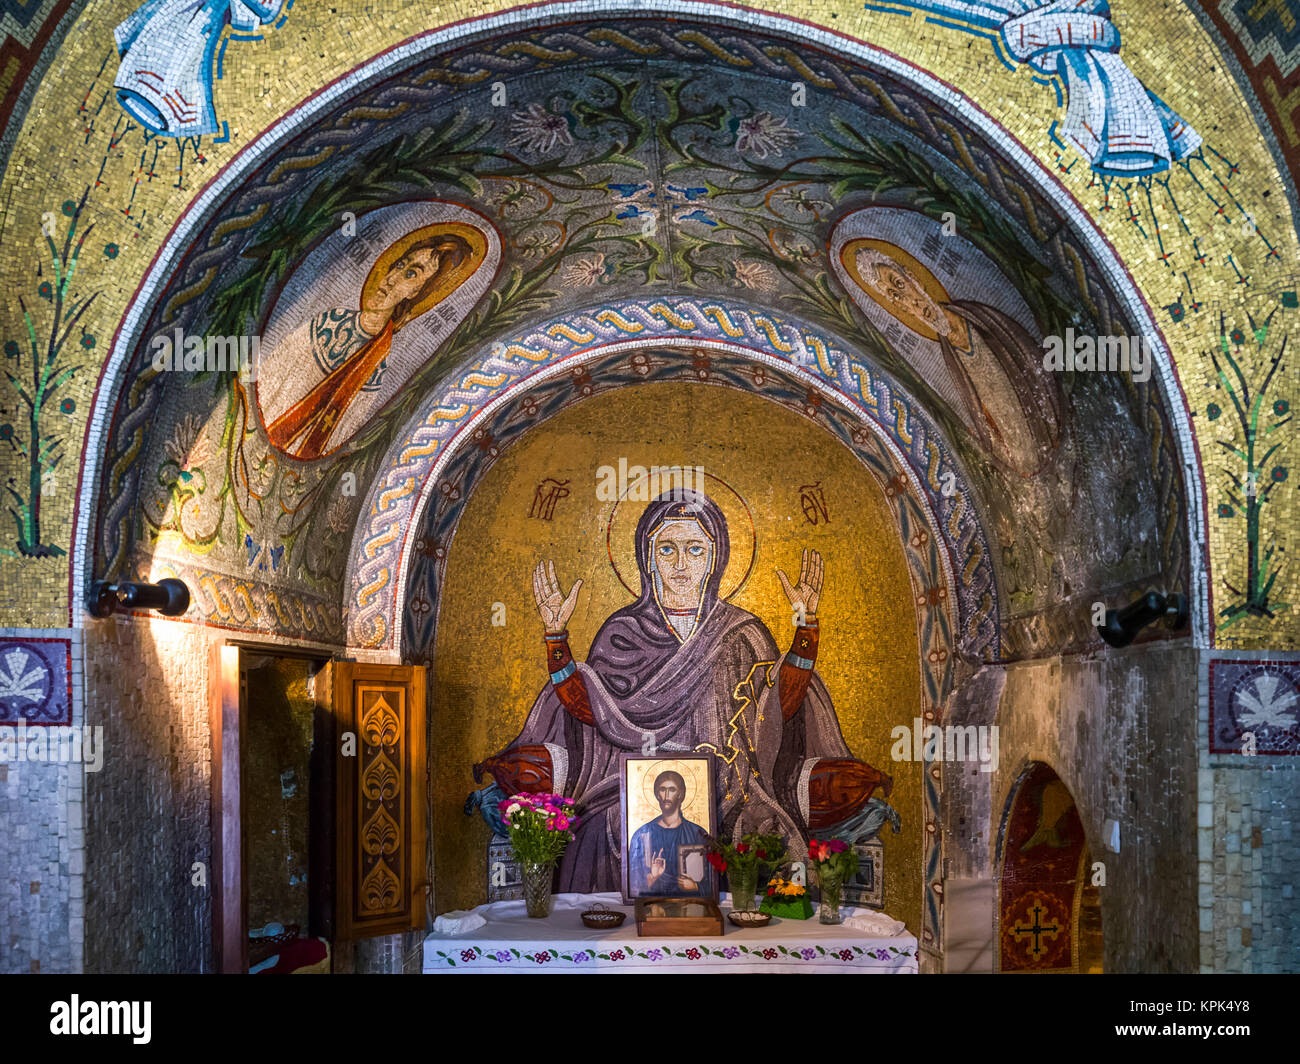 Farbenfrohe Kunstwerke in St. Petka's Chapel in der Belgrader Festung, Belgrad, Vojvodina, Serbien Stockfoto